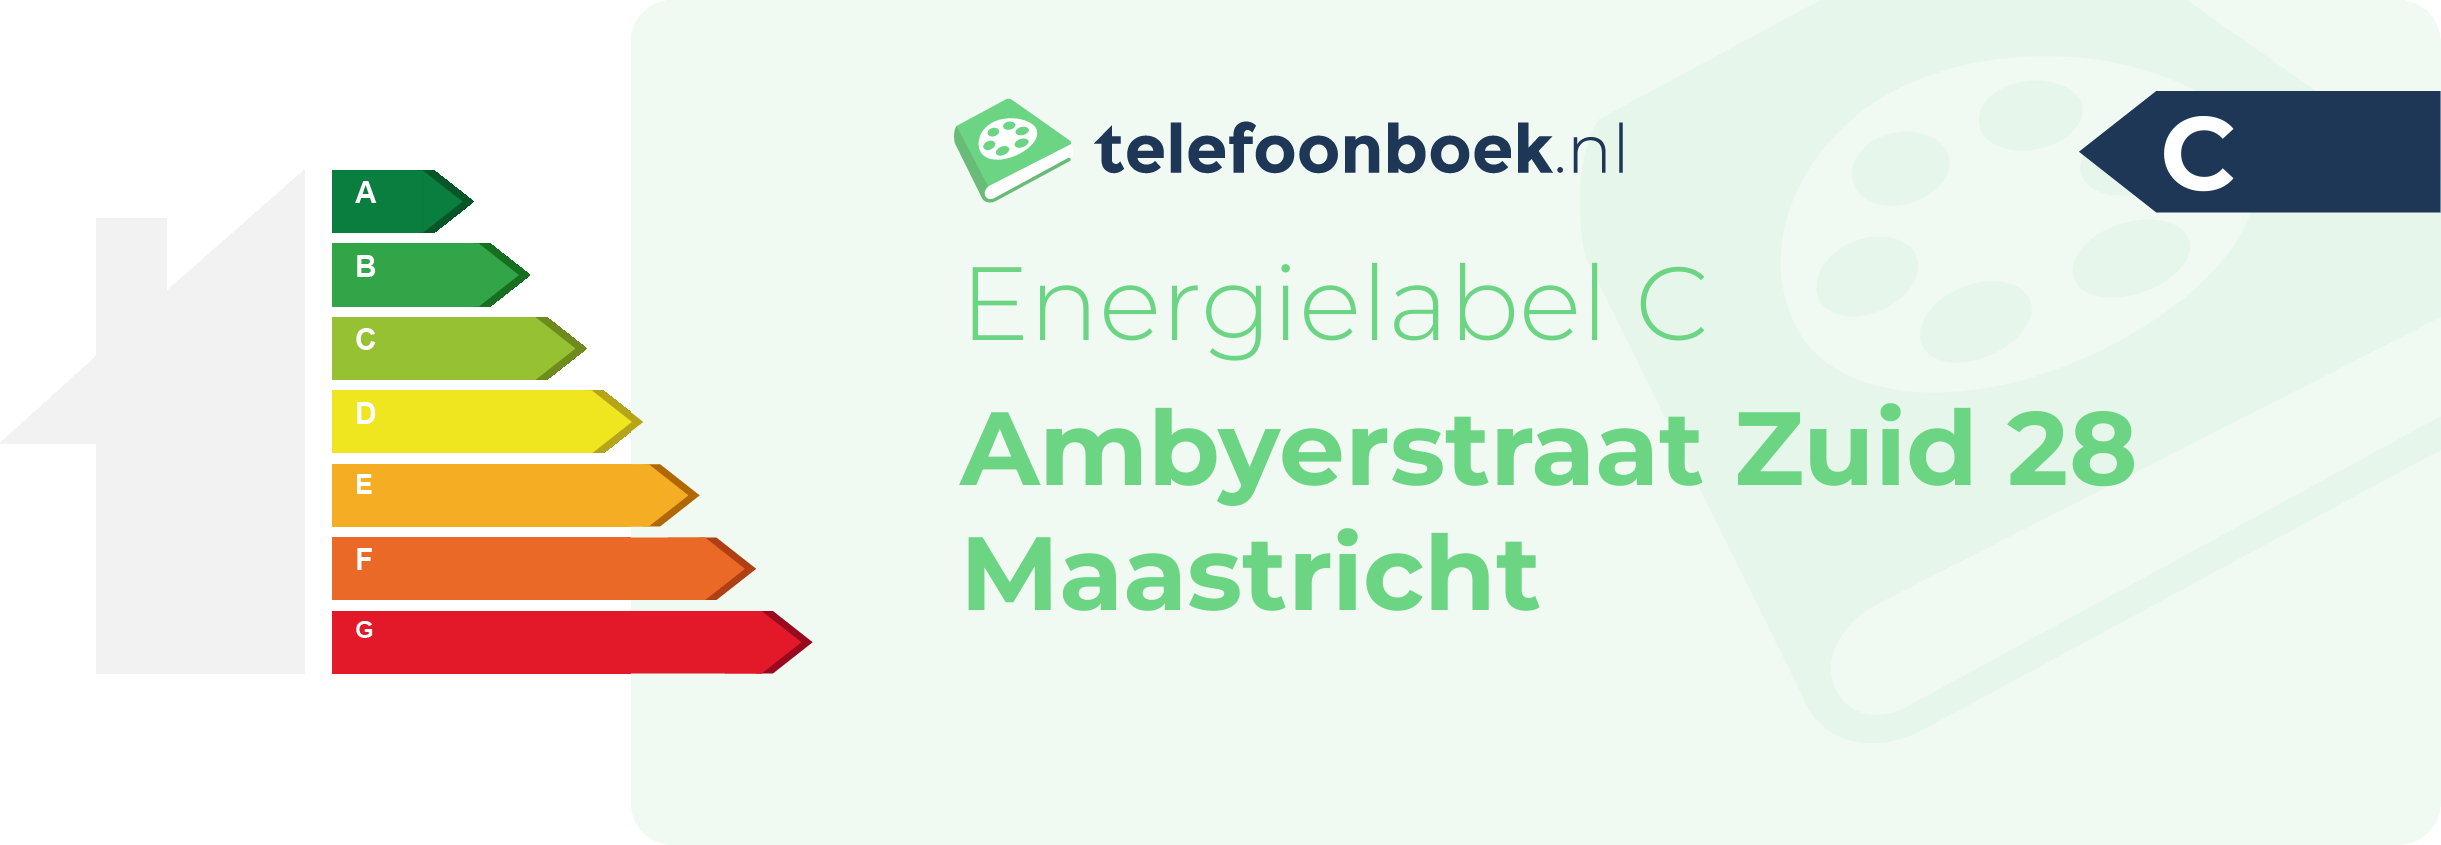 Energielabel Ambyerstraat Zuid 28 Maastricht